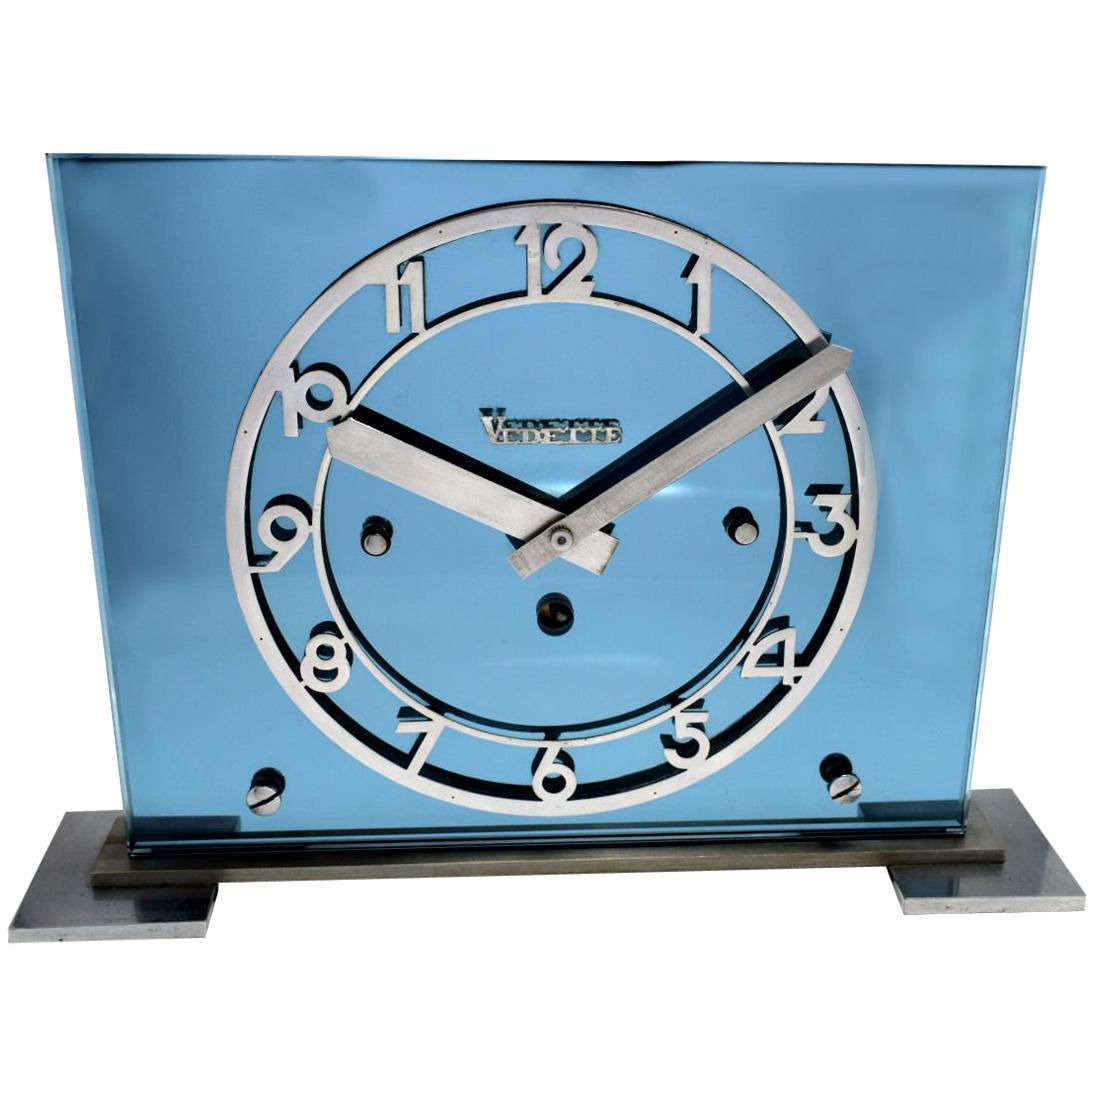 Art Deco Large Blue Mirror Modernist Clock by Vedette, c1930